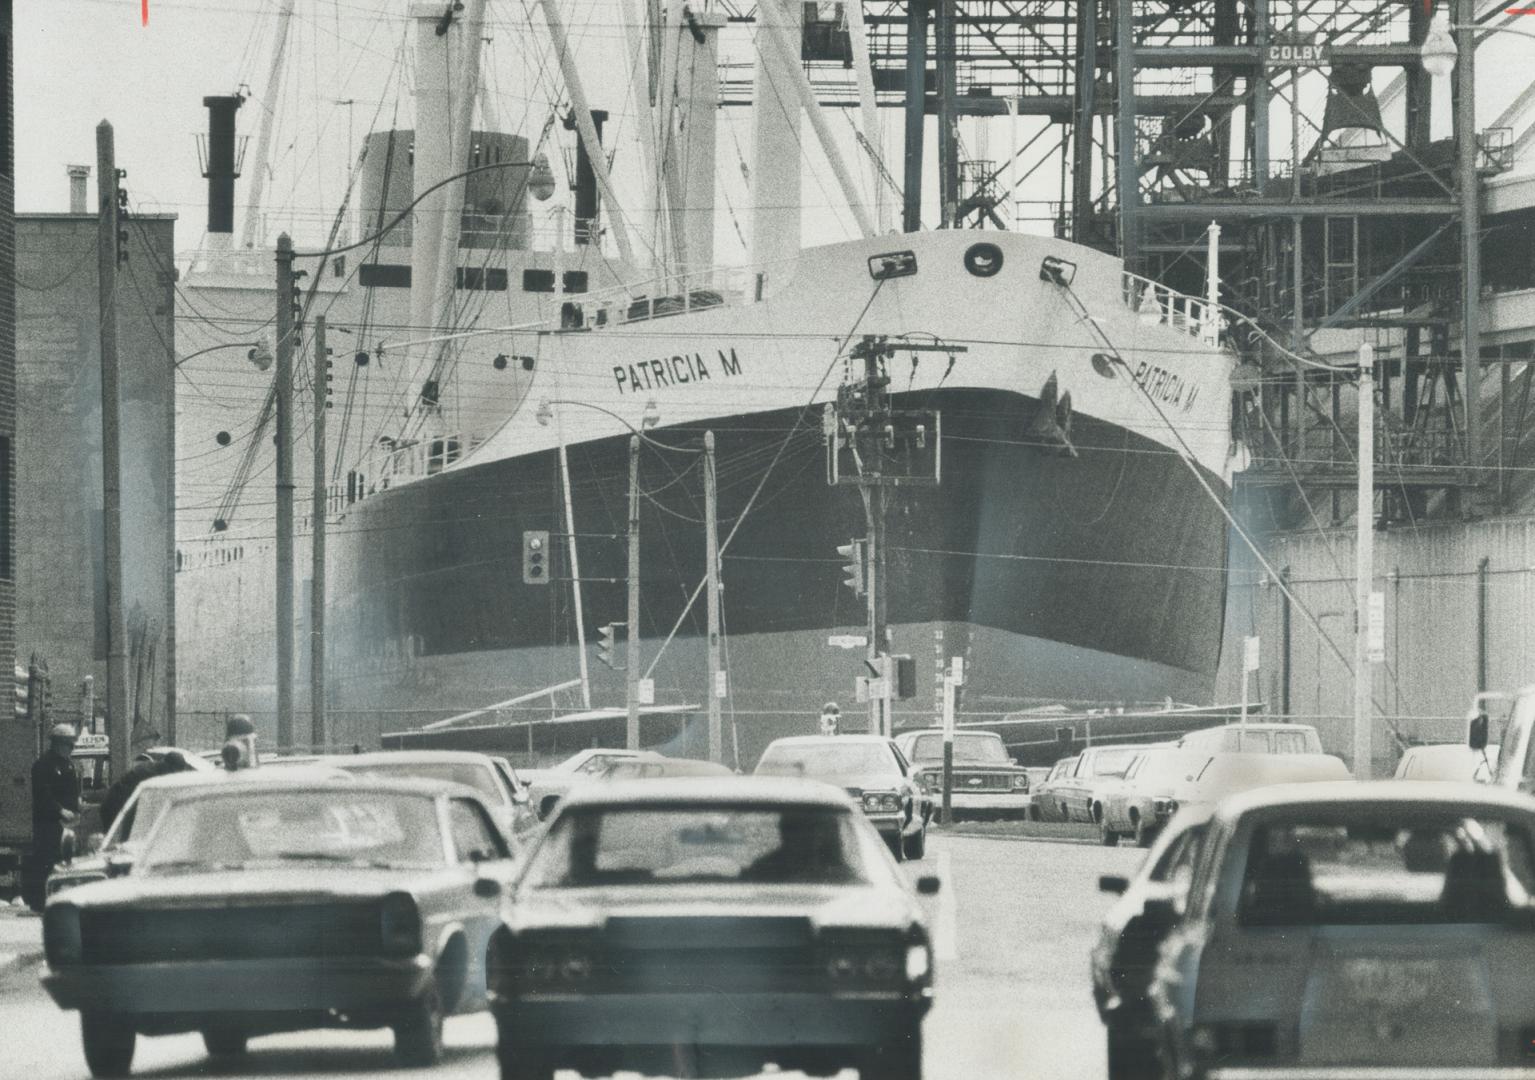 Image shows a huge cargo ship docked.